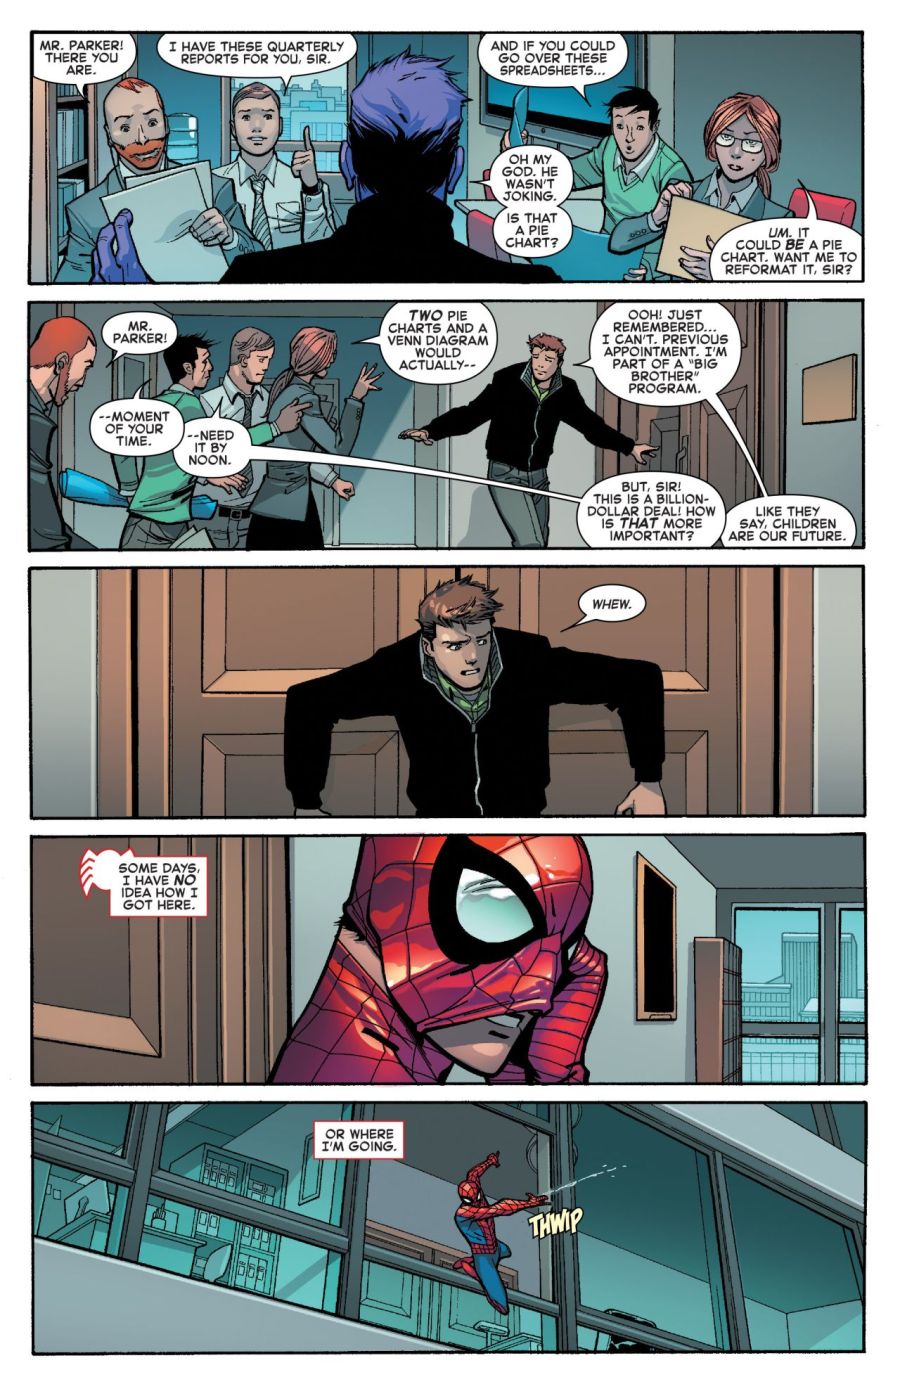 The Amazing Spider-Man #13